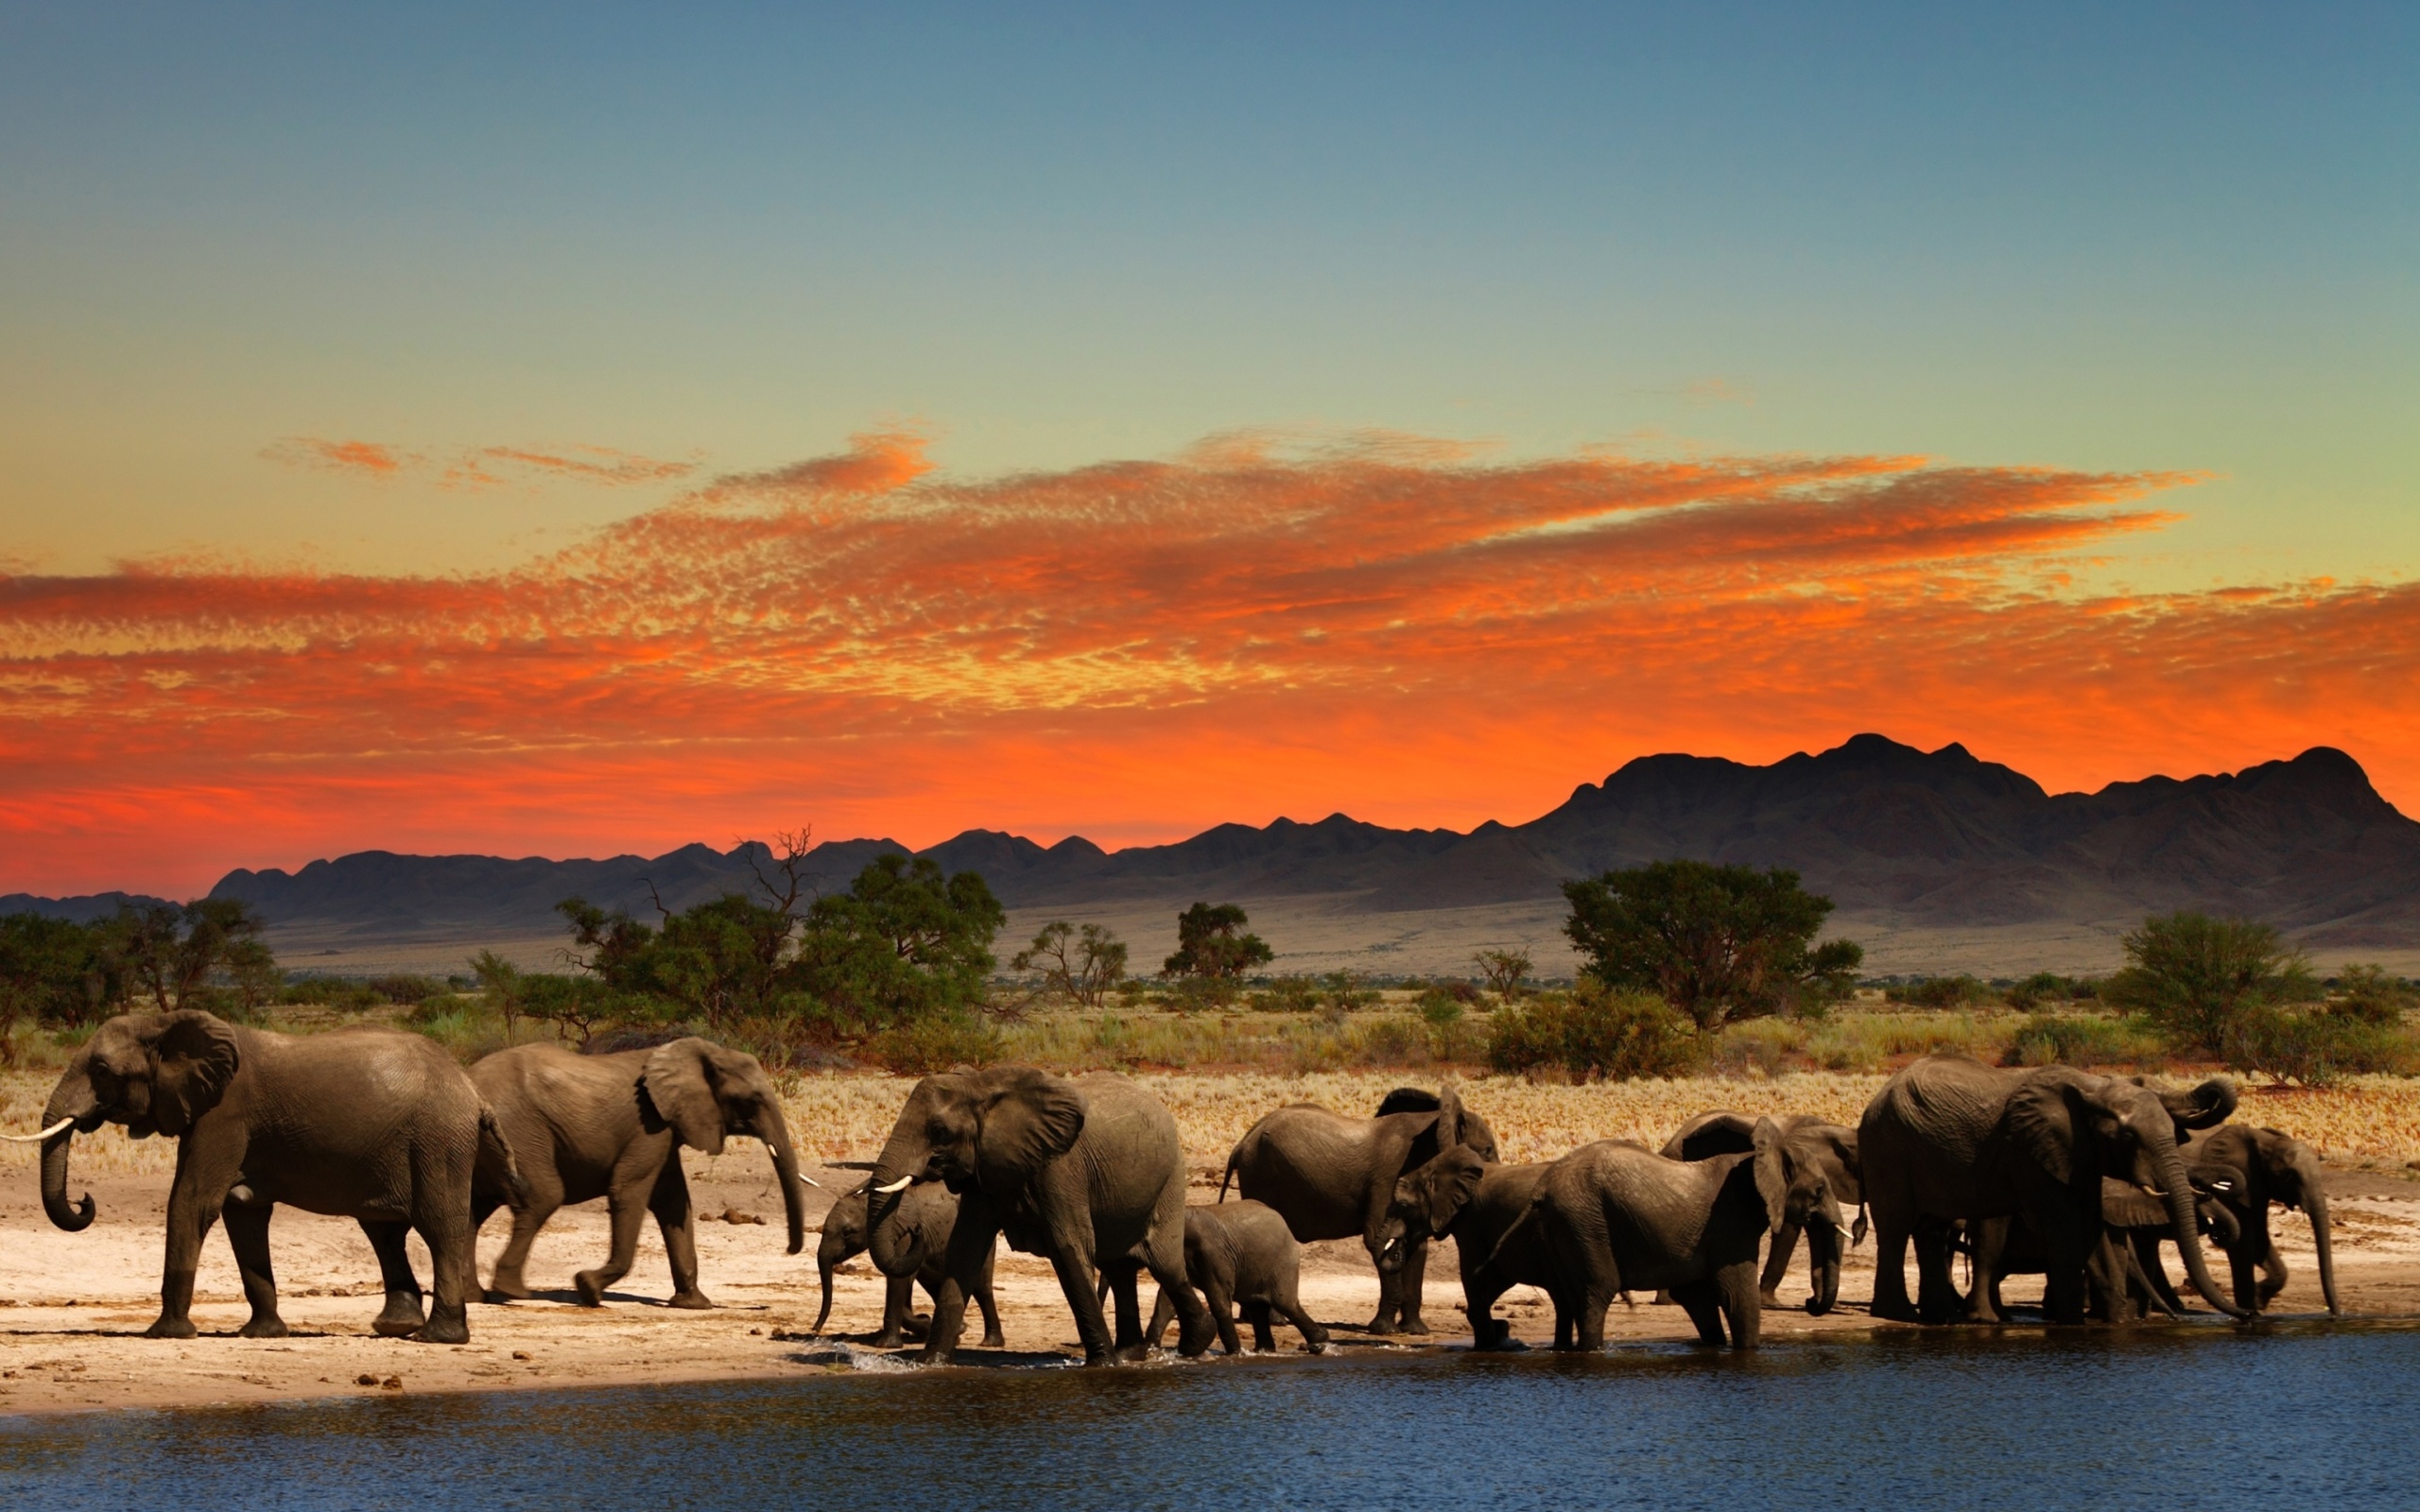 Das Herd of elephants Safari Wallpaper 2560x1600